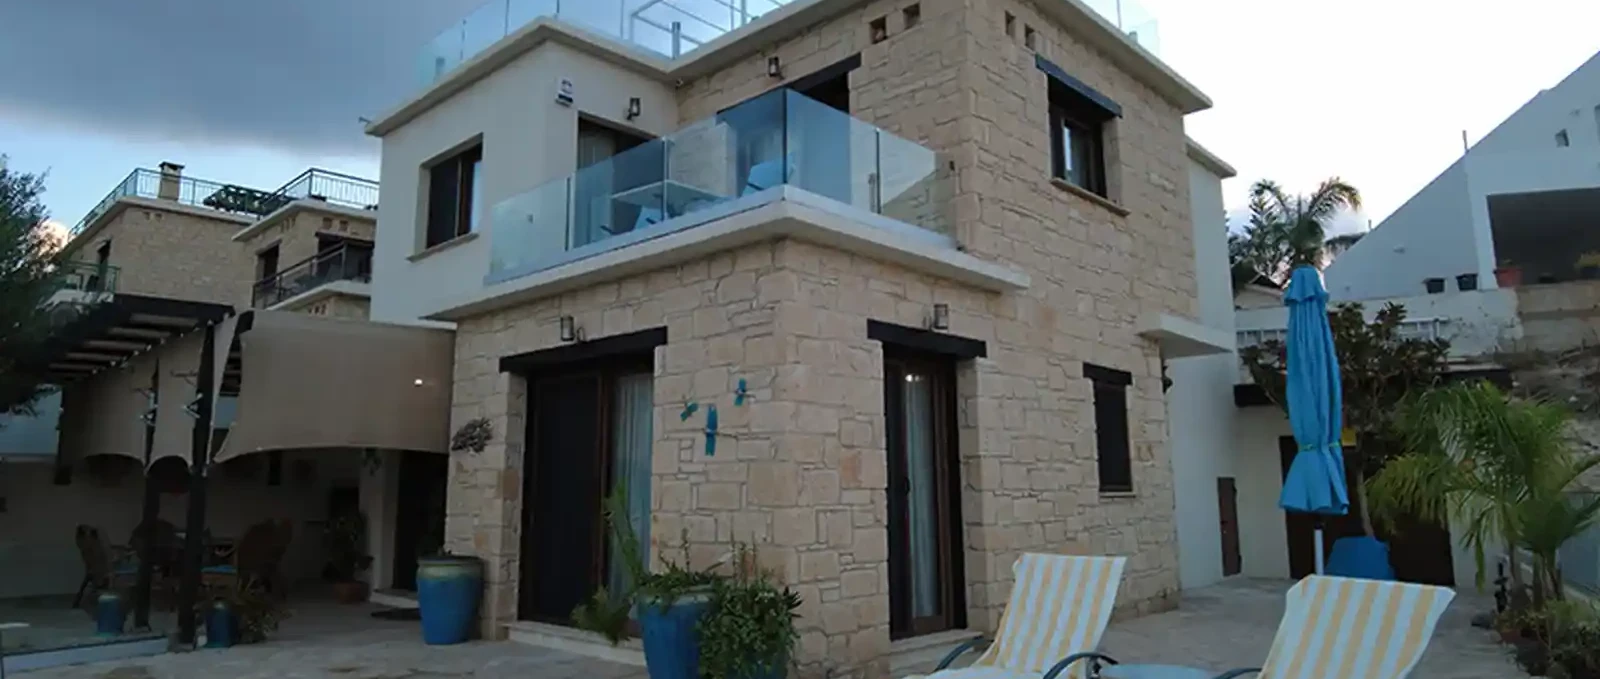 4-bedroom villa fоr sаle €449.000, image 1